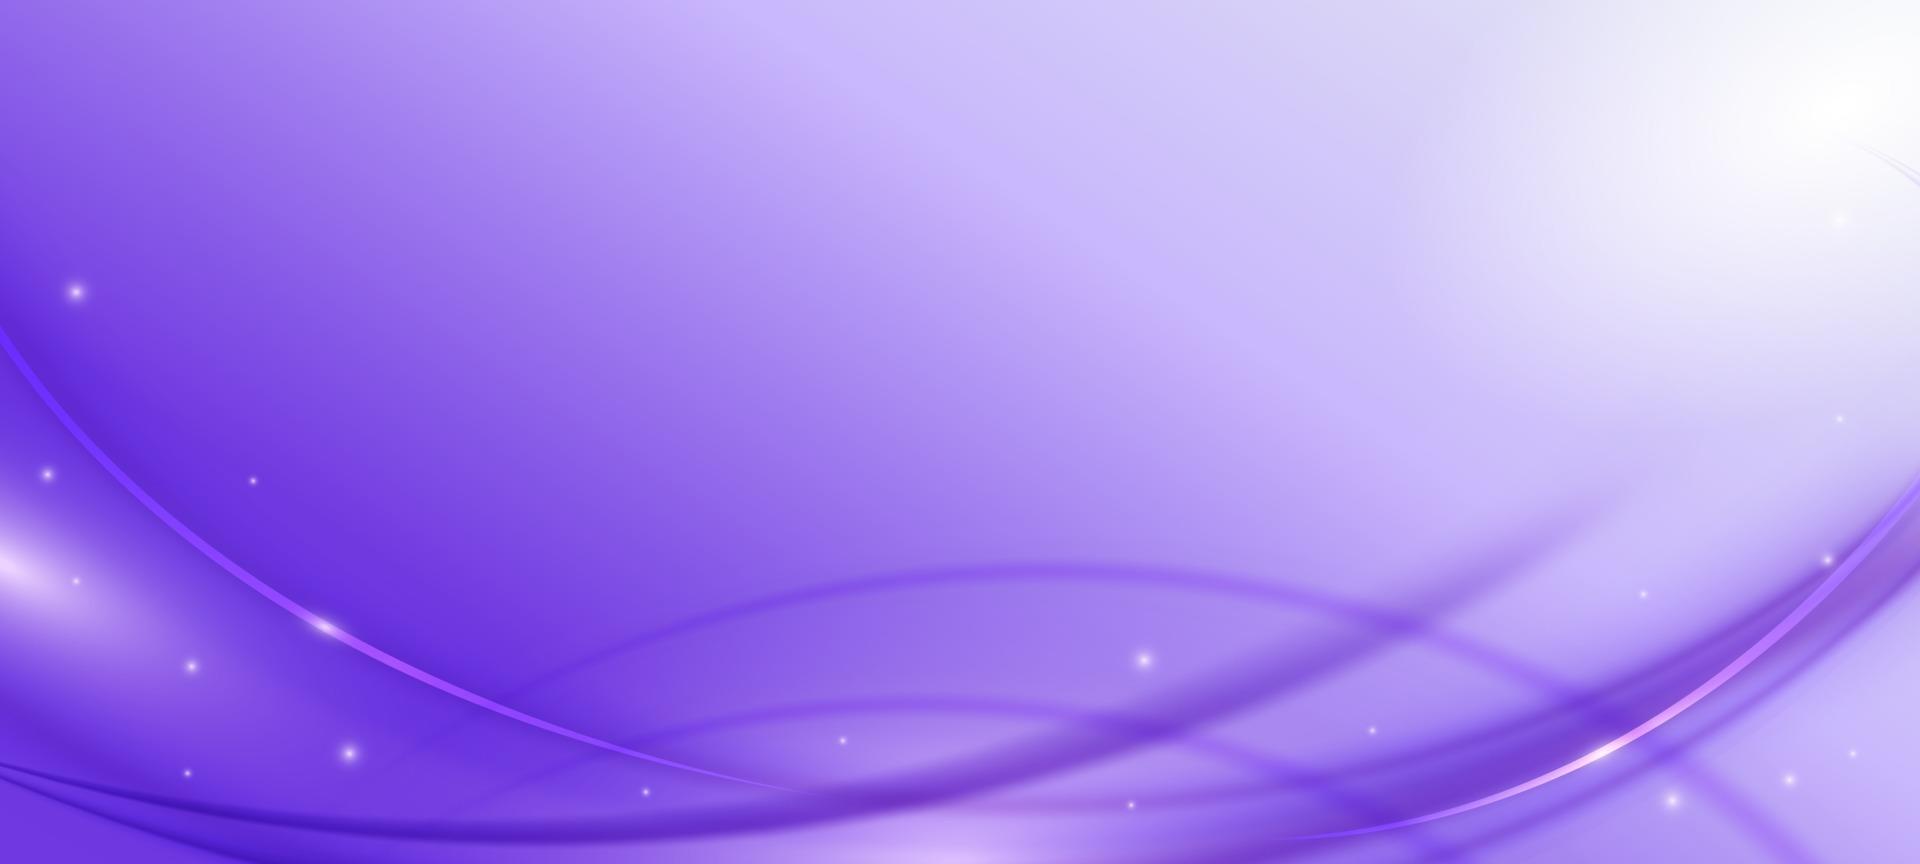 fondo de color lavanda púrpura vector